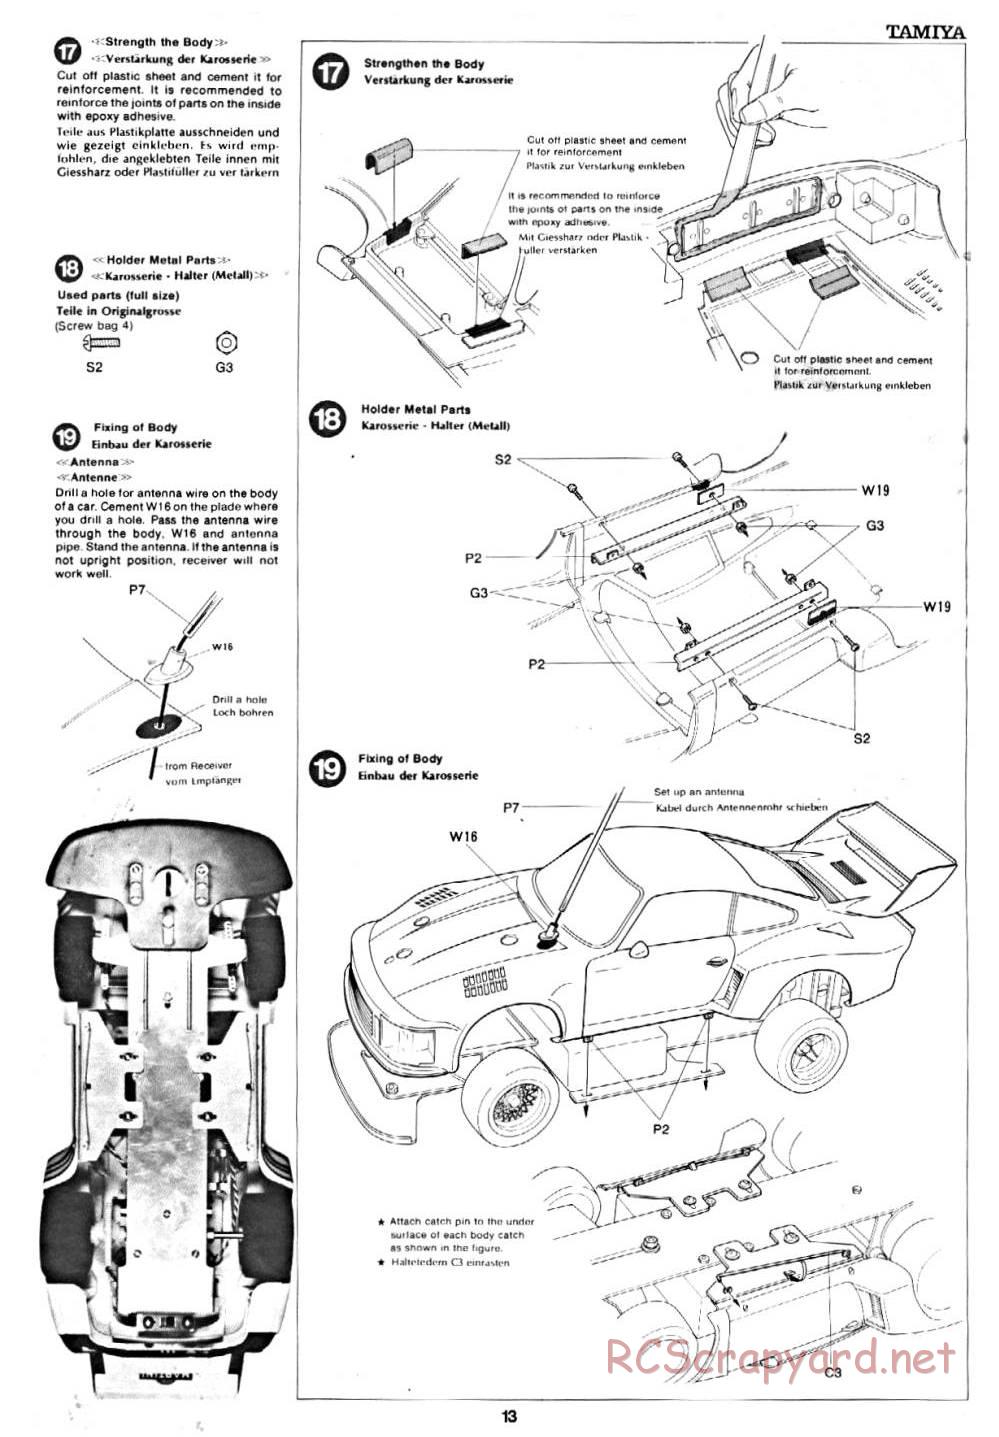 Tamiya - Martini Porsche 935 Turbo - 58002 - Manual - Page 13